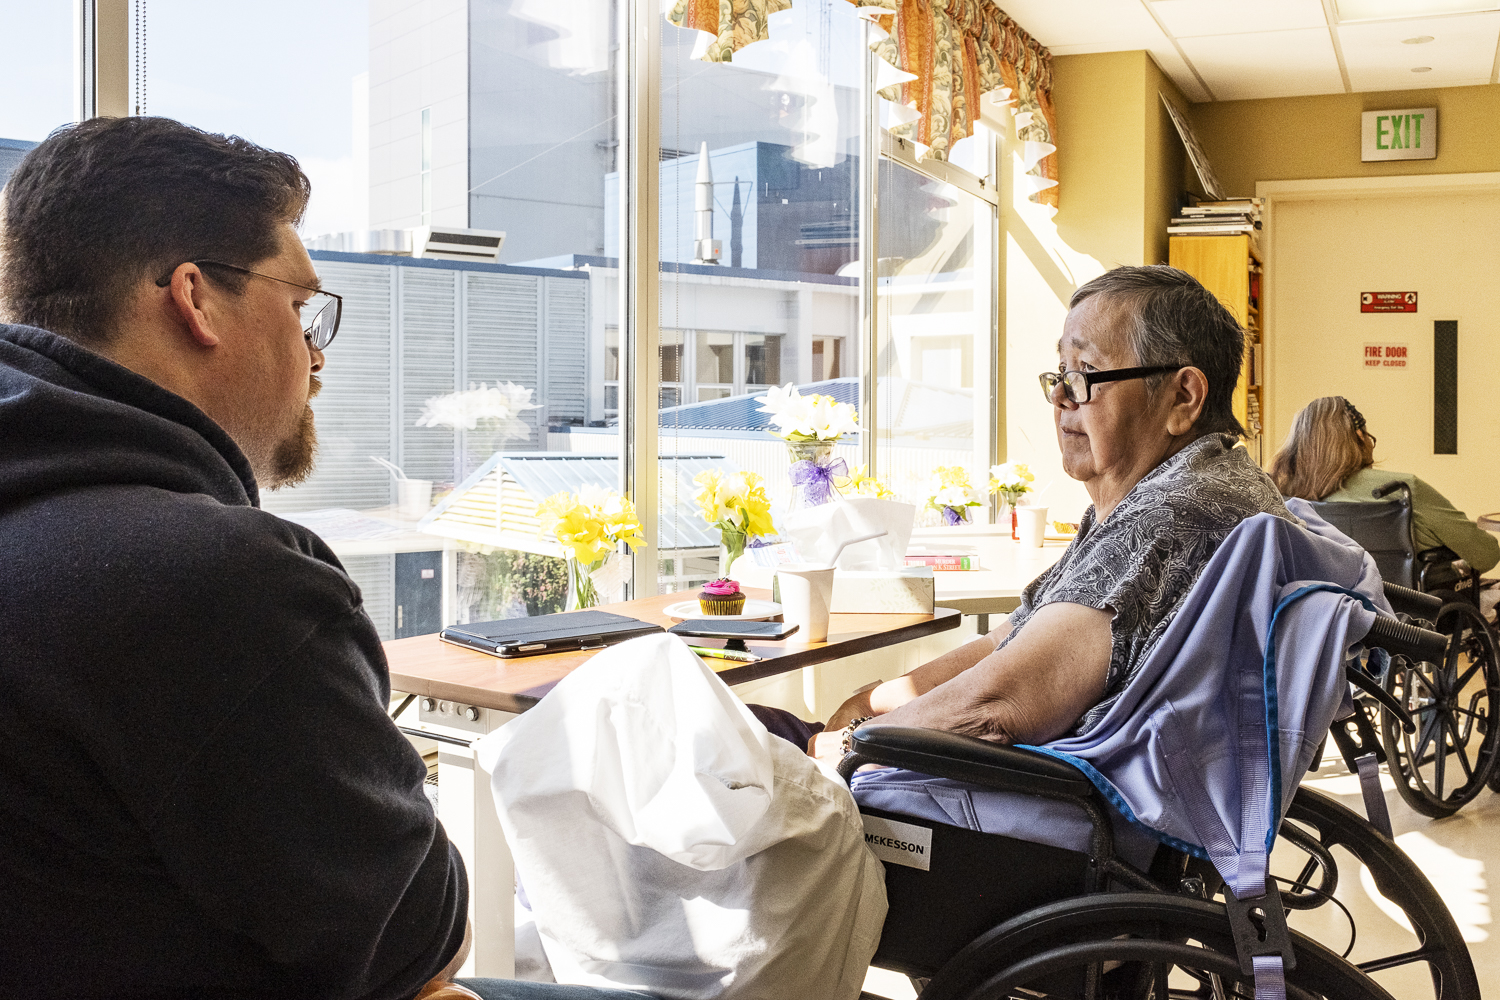 David Robert Boxley meeting with his Tsimshian language teacher, G̱oodm Nluułgm Xsgiik - Sarah Booth, in a hospital in Ketchikan, Alaska.